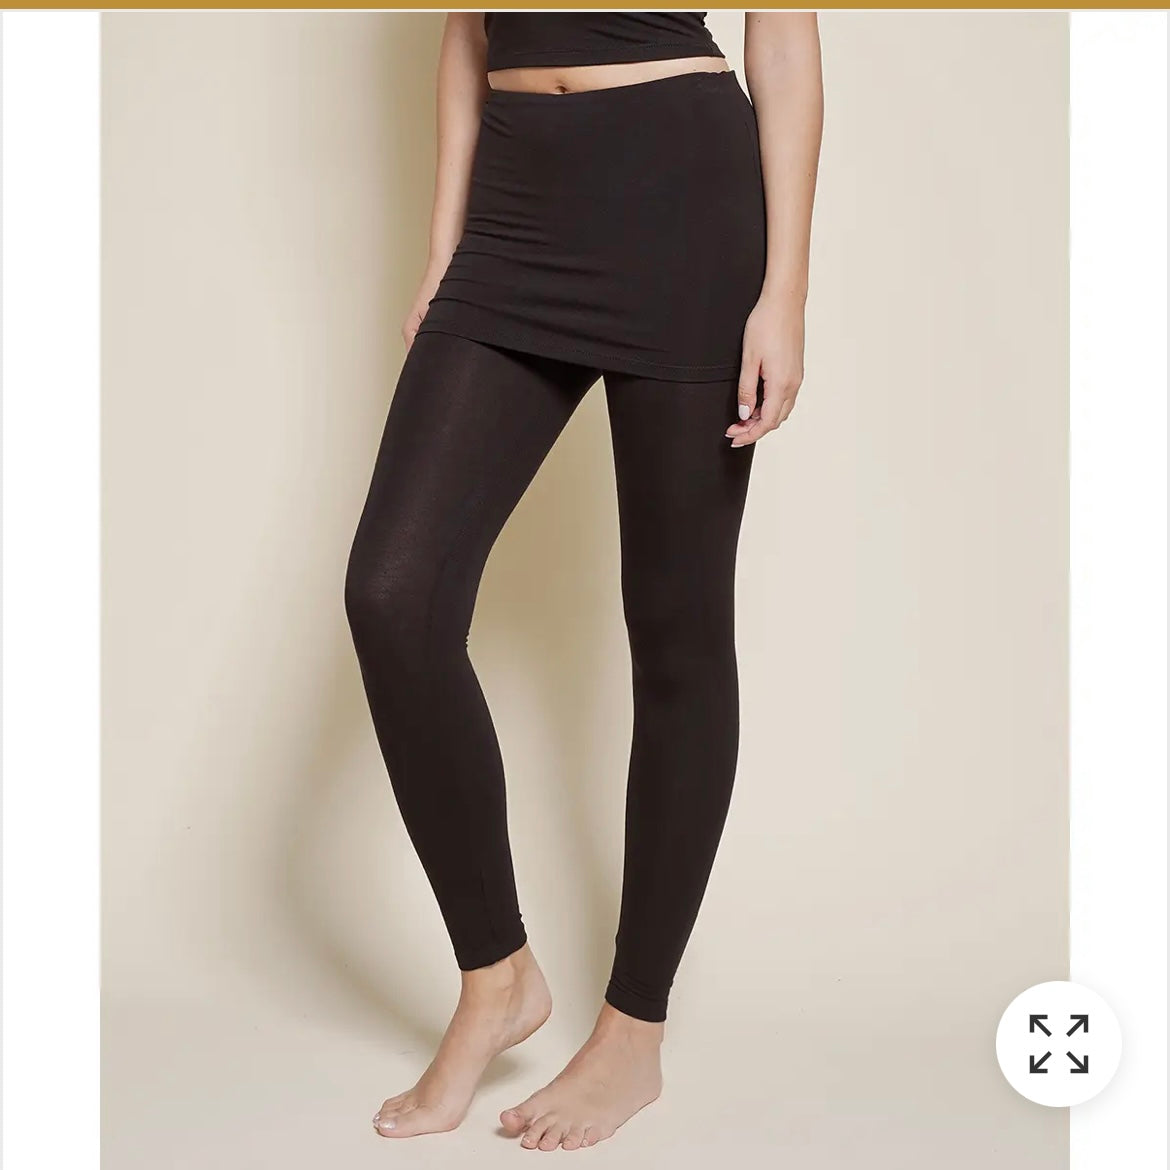 Black Bamboo Legging w/Skirt - One Size - FINAL SALE — Sorellina